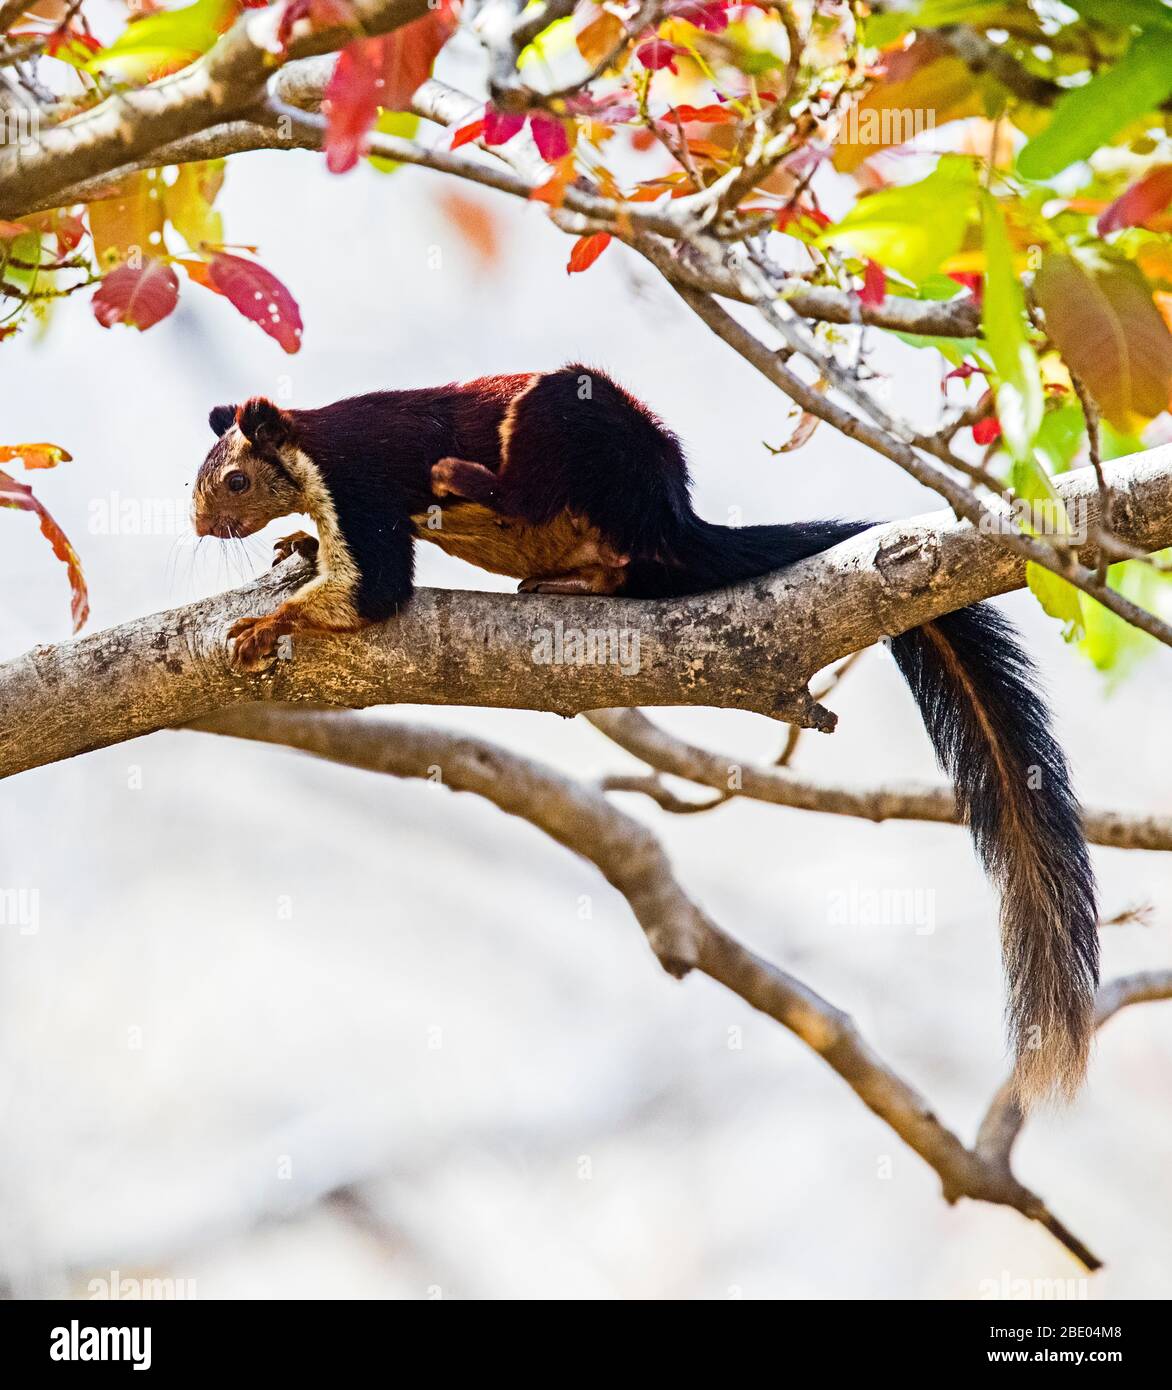 Giant squirrel (Ratufa indica) on tree branch, India Stock Photo